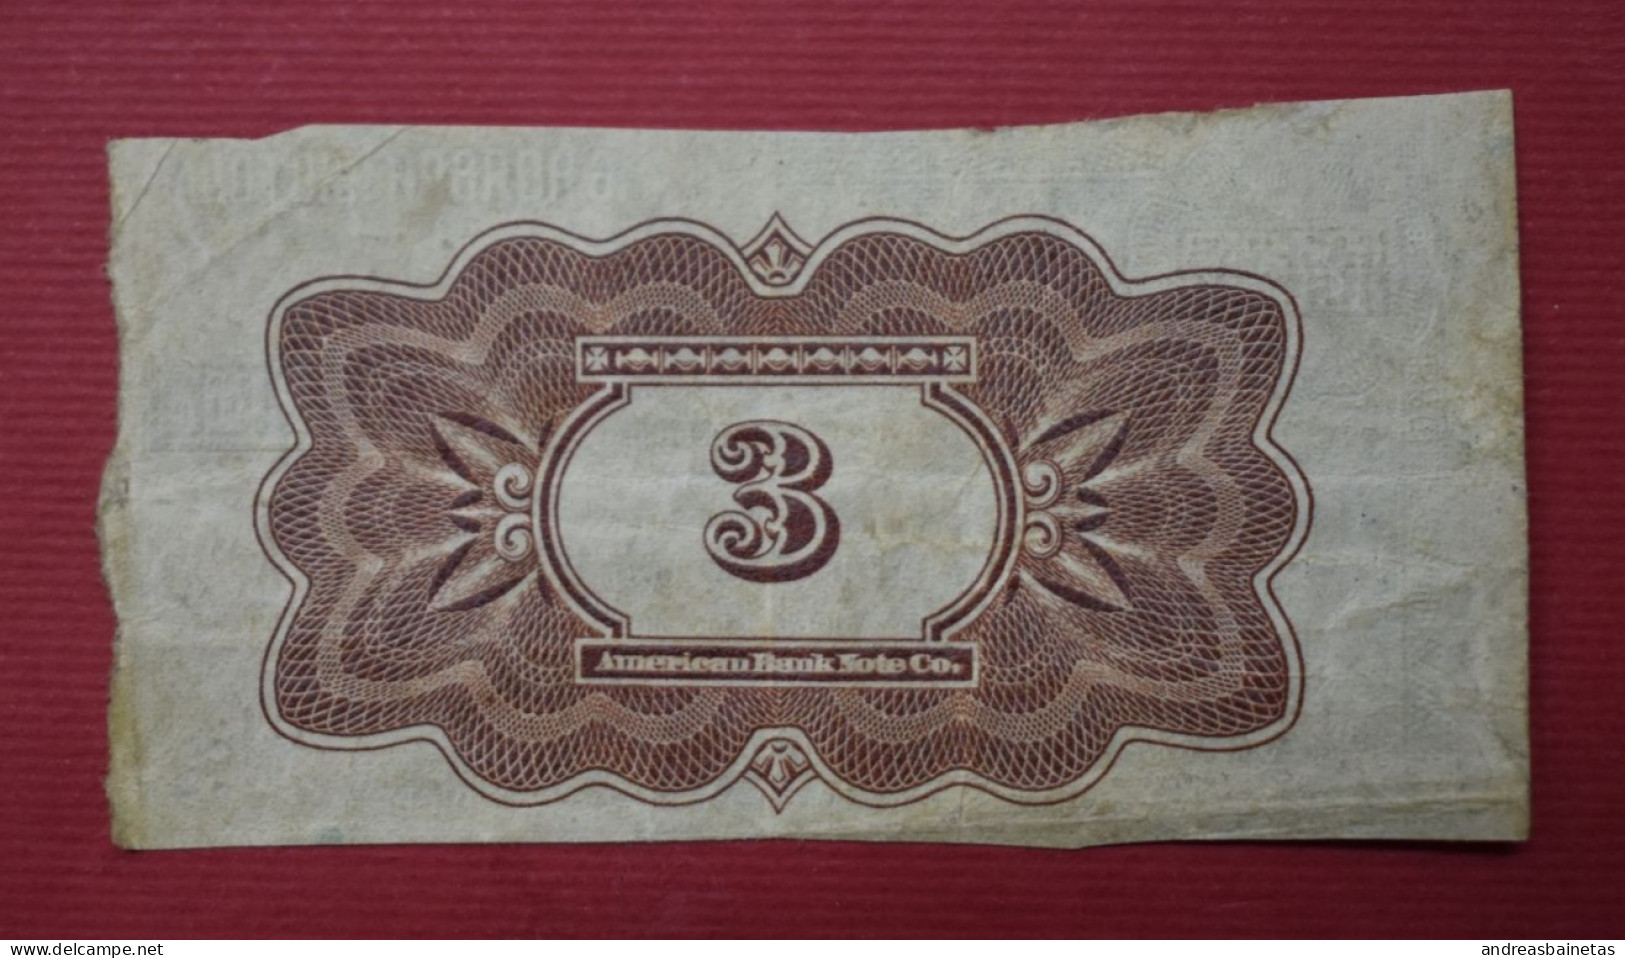 Banknotes Russia - Civil War Issues 4½ Roubles Irkutsk 1917 - Russia